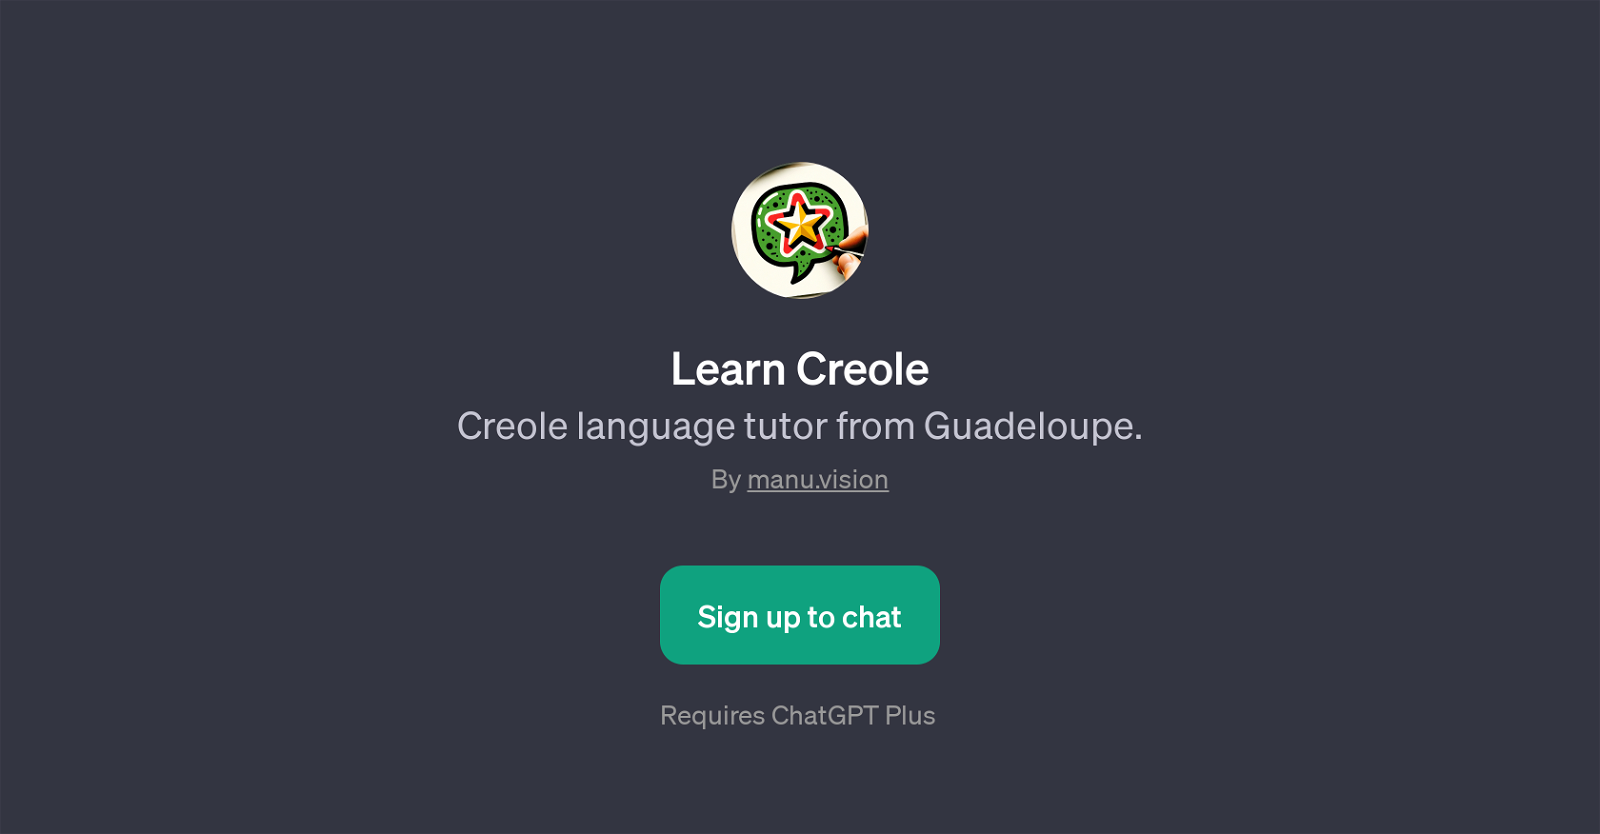 Learn Creole website